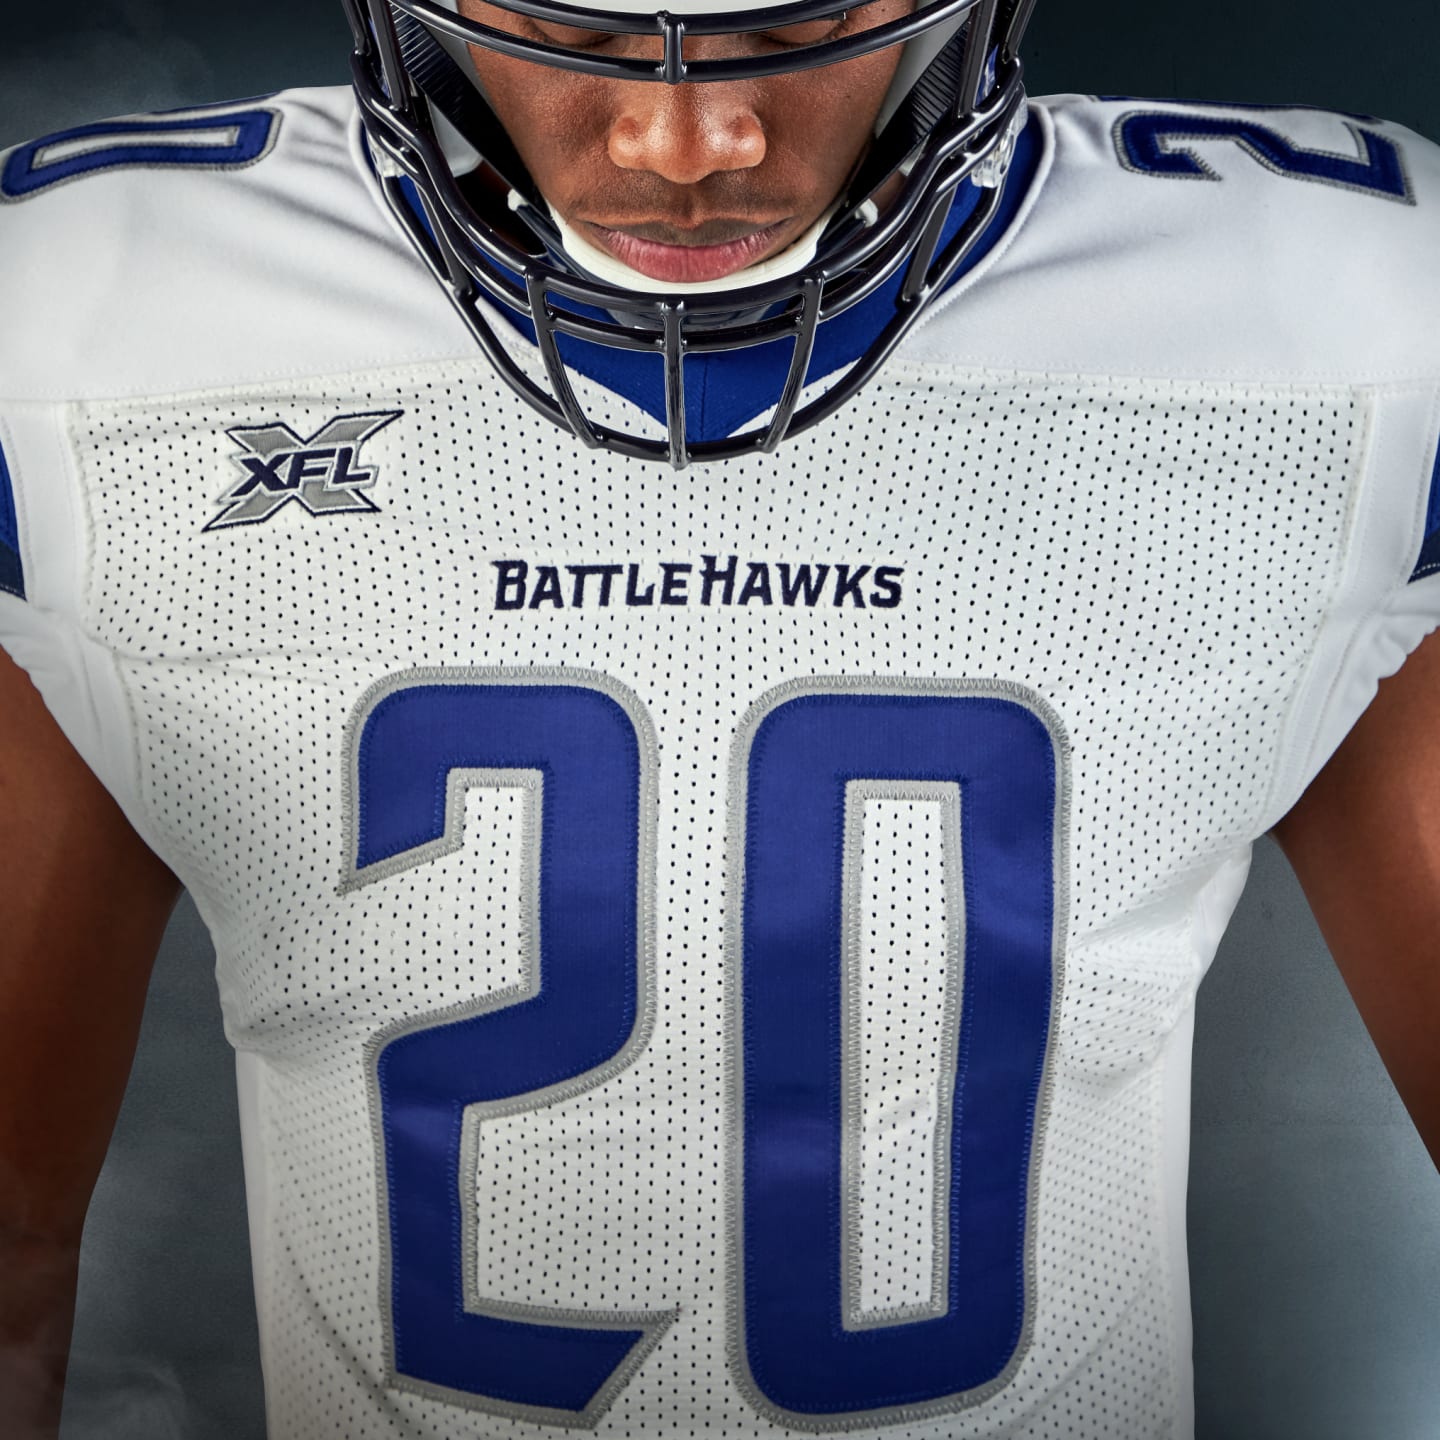 XFL reveals new Battlehawks uniforms